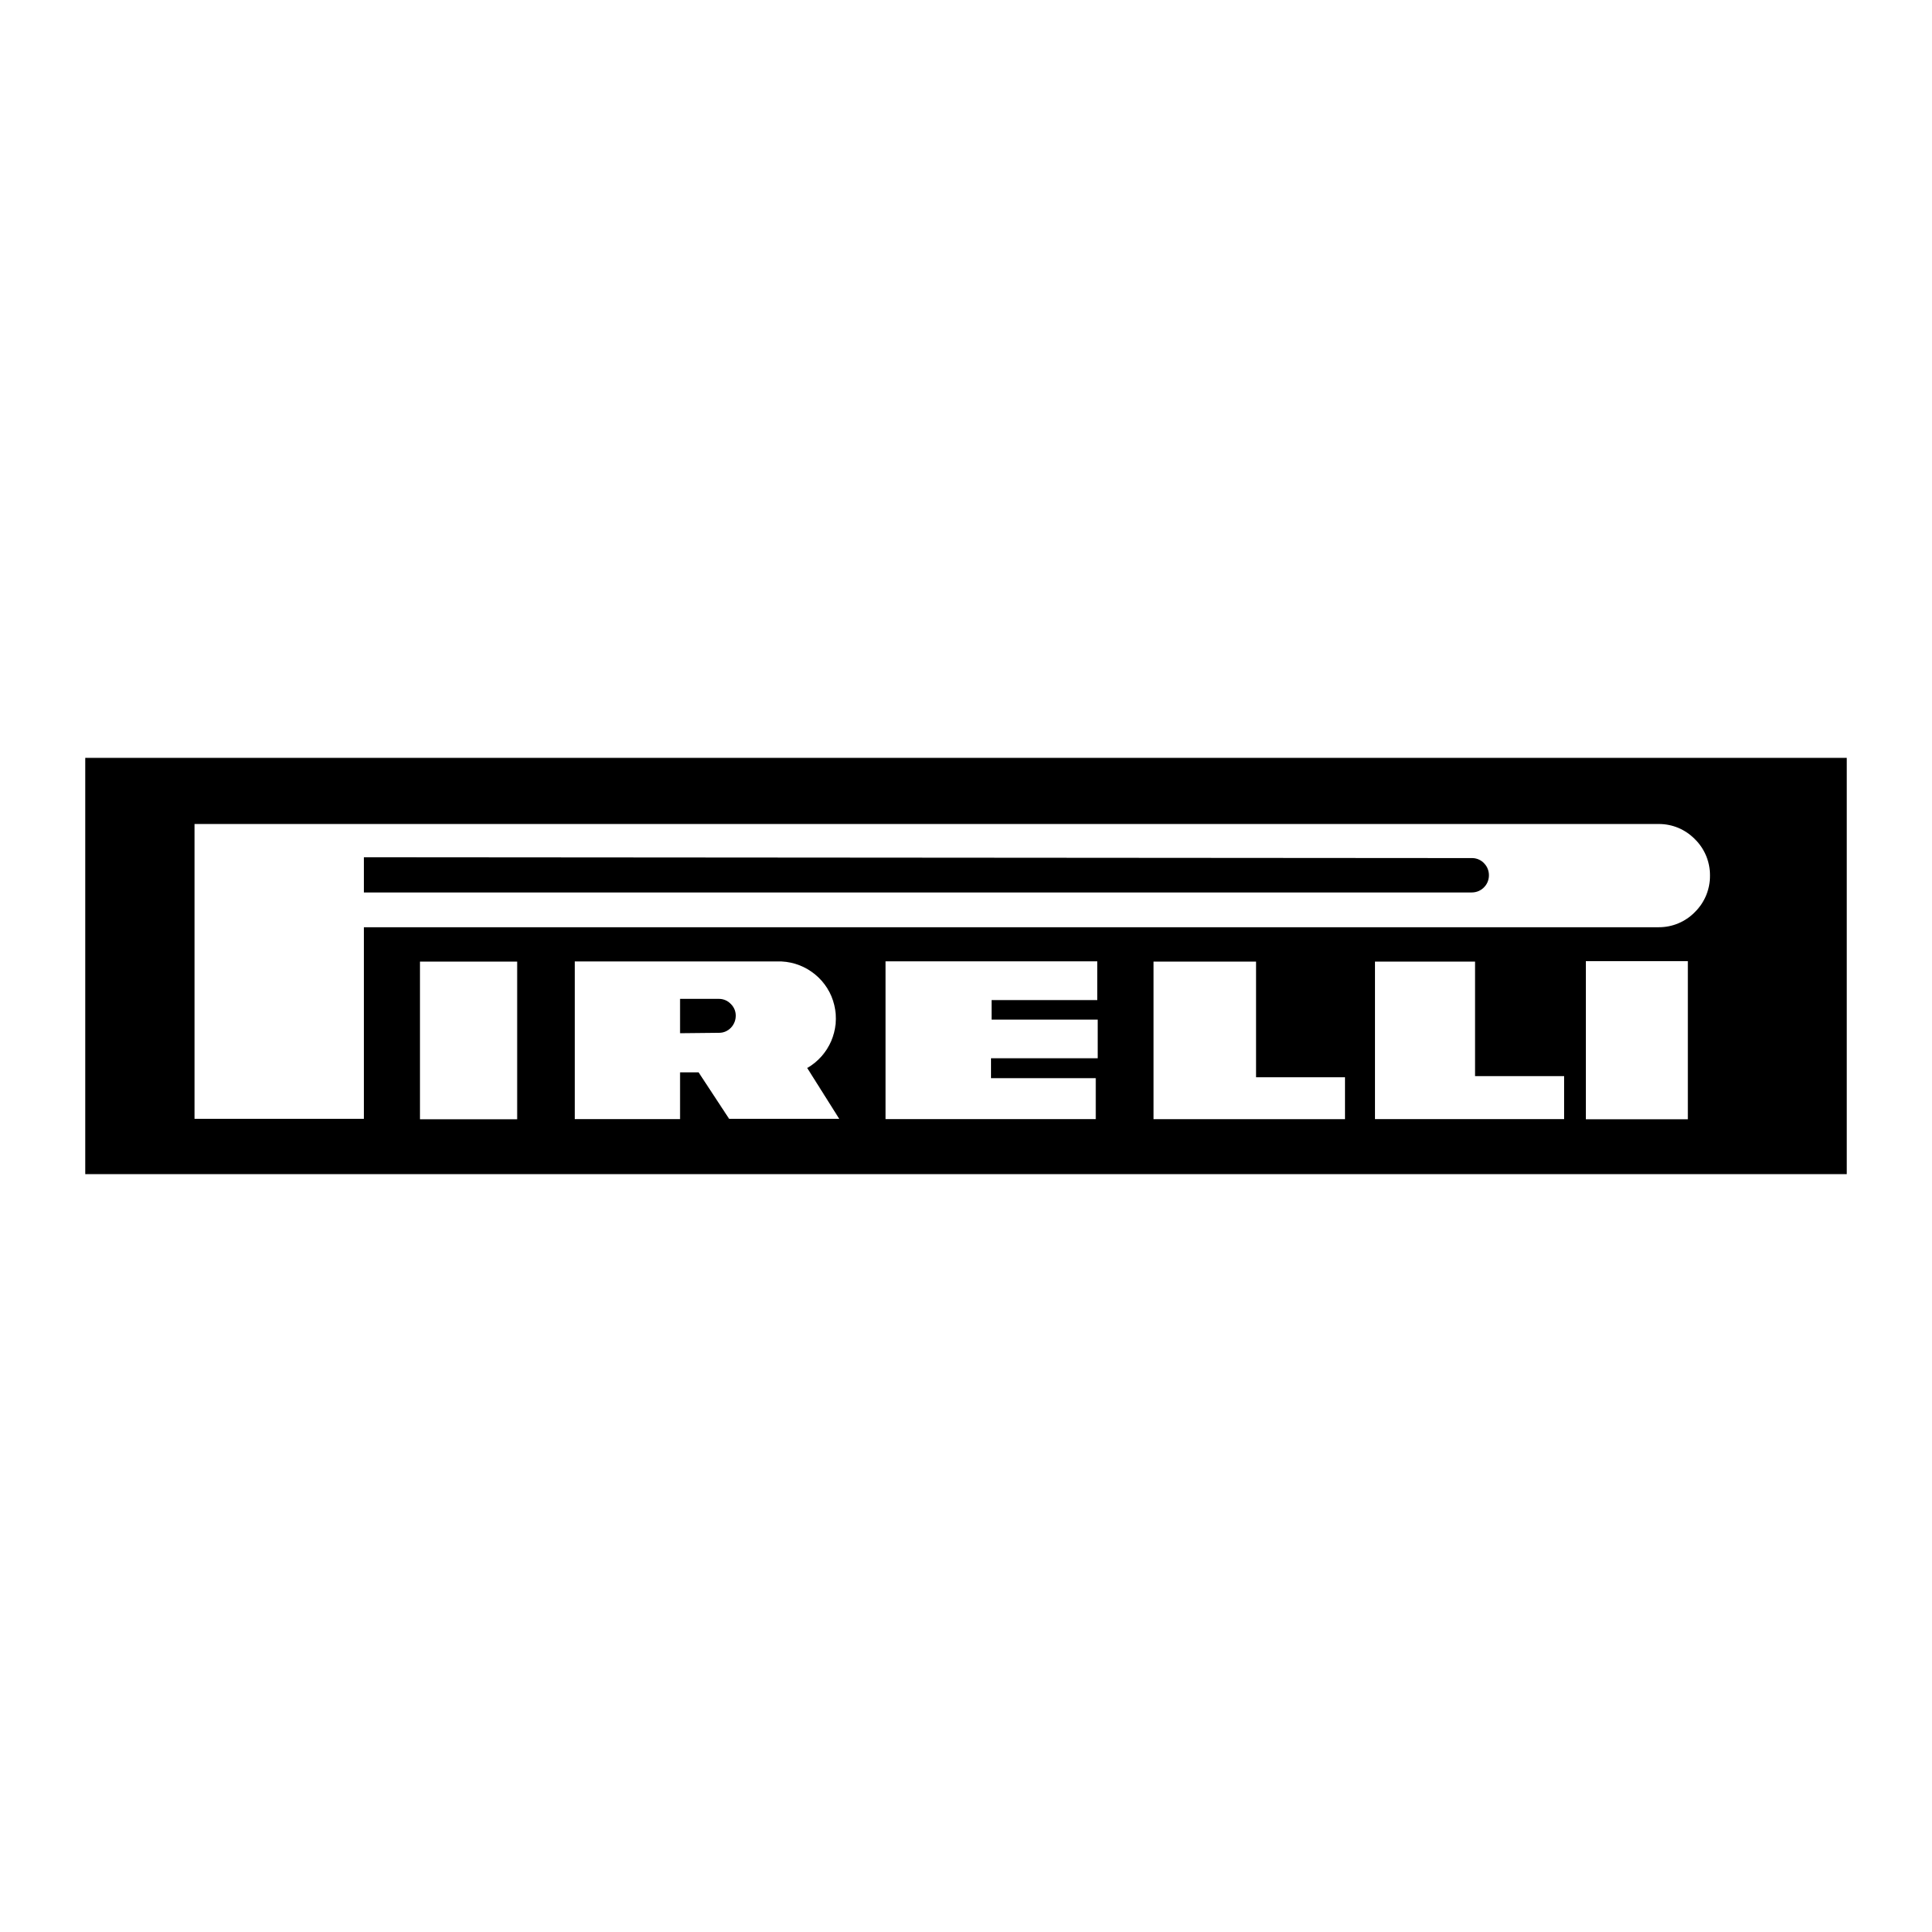 Pirelli Logo - Pirelli Logo PNG Transparent & SVG Vector - Freebie Supply